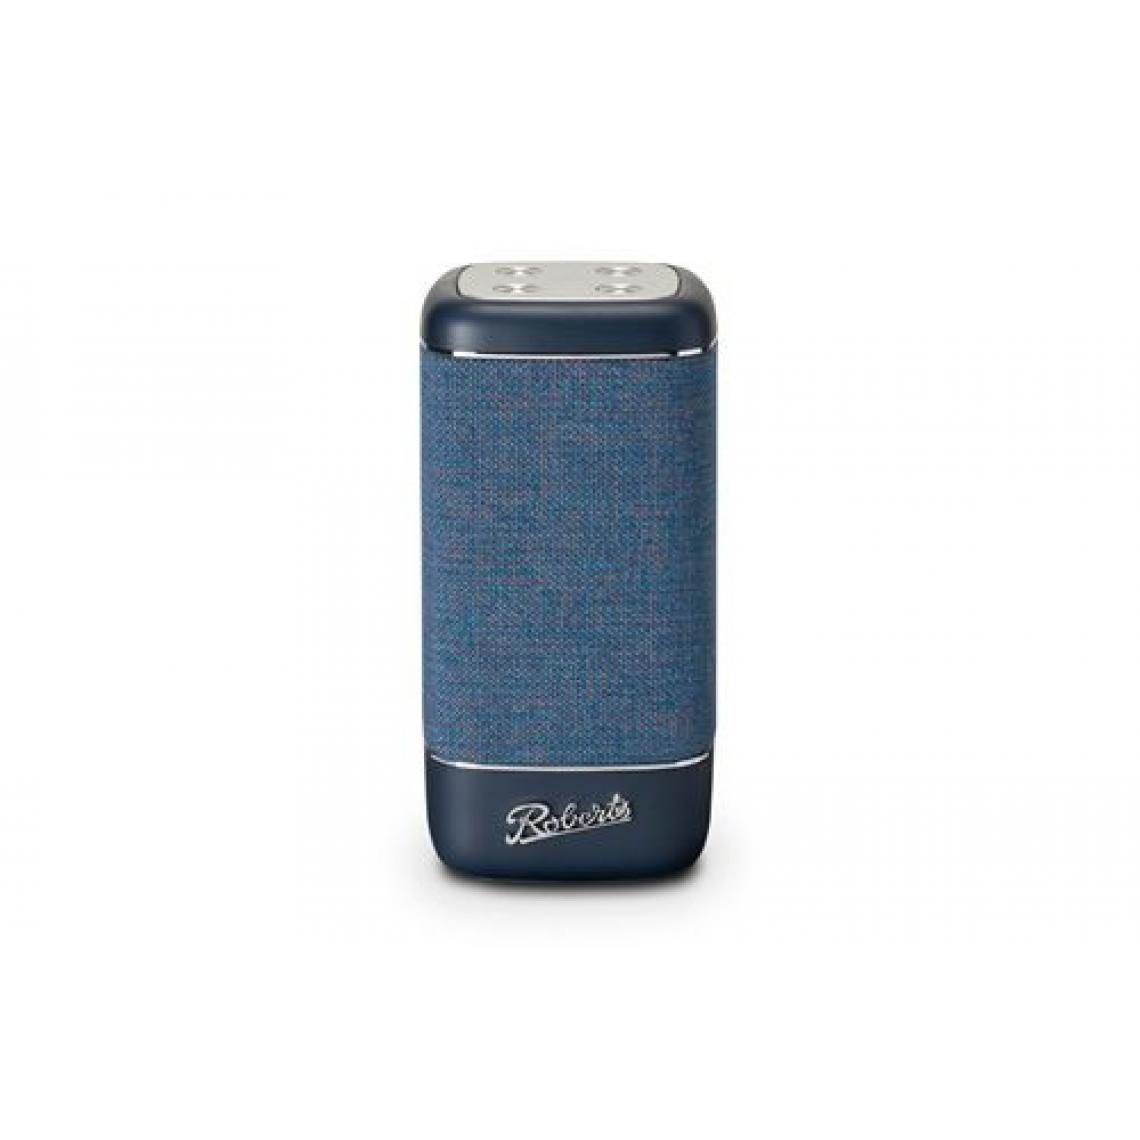 Roberts - Enceinte portable Bluetooth Roberts Beacon 325 Bleu minuit - Enceintes Hifi